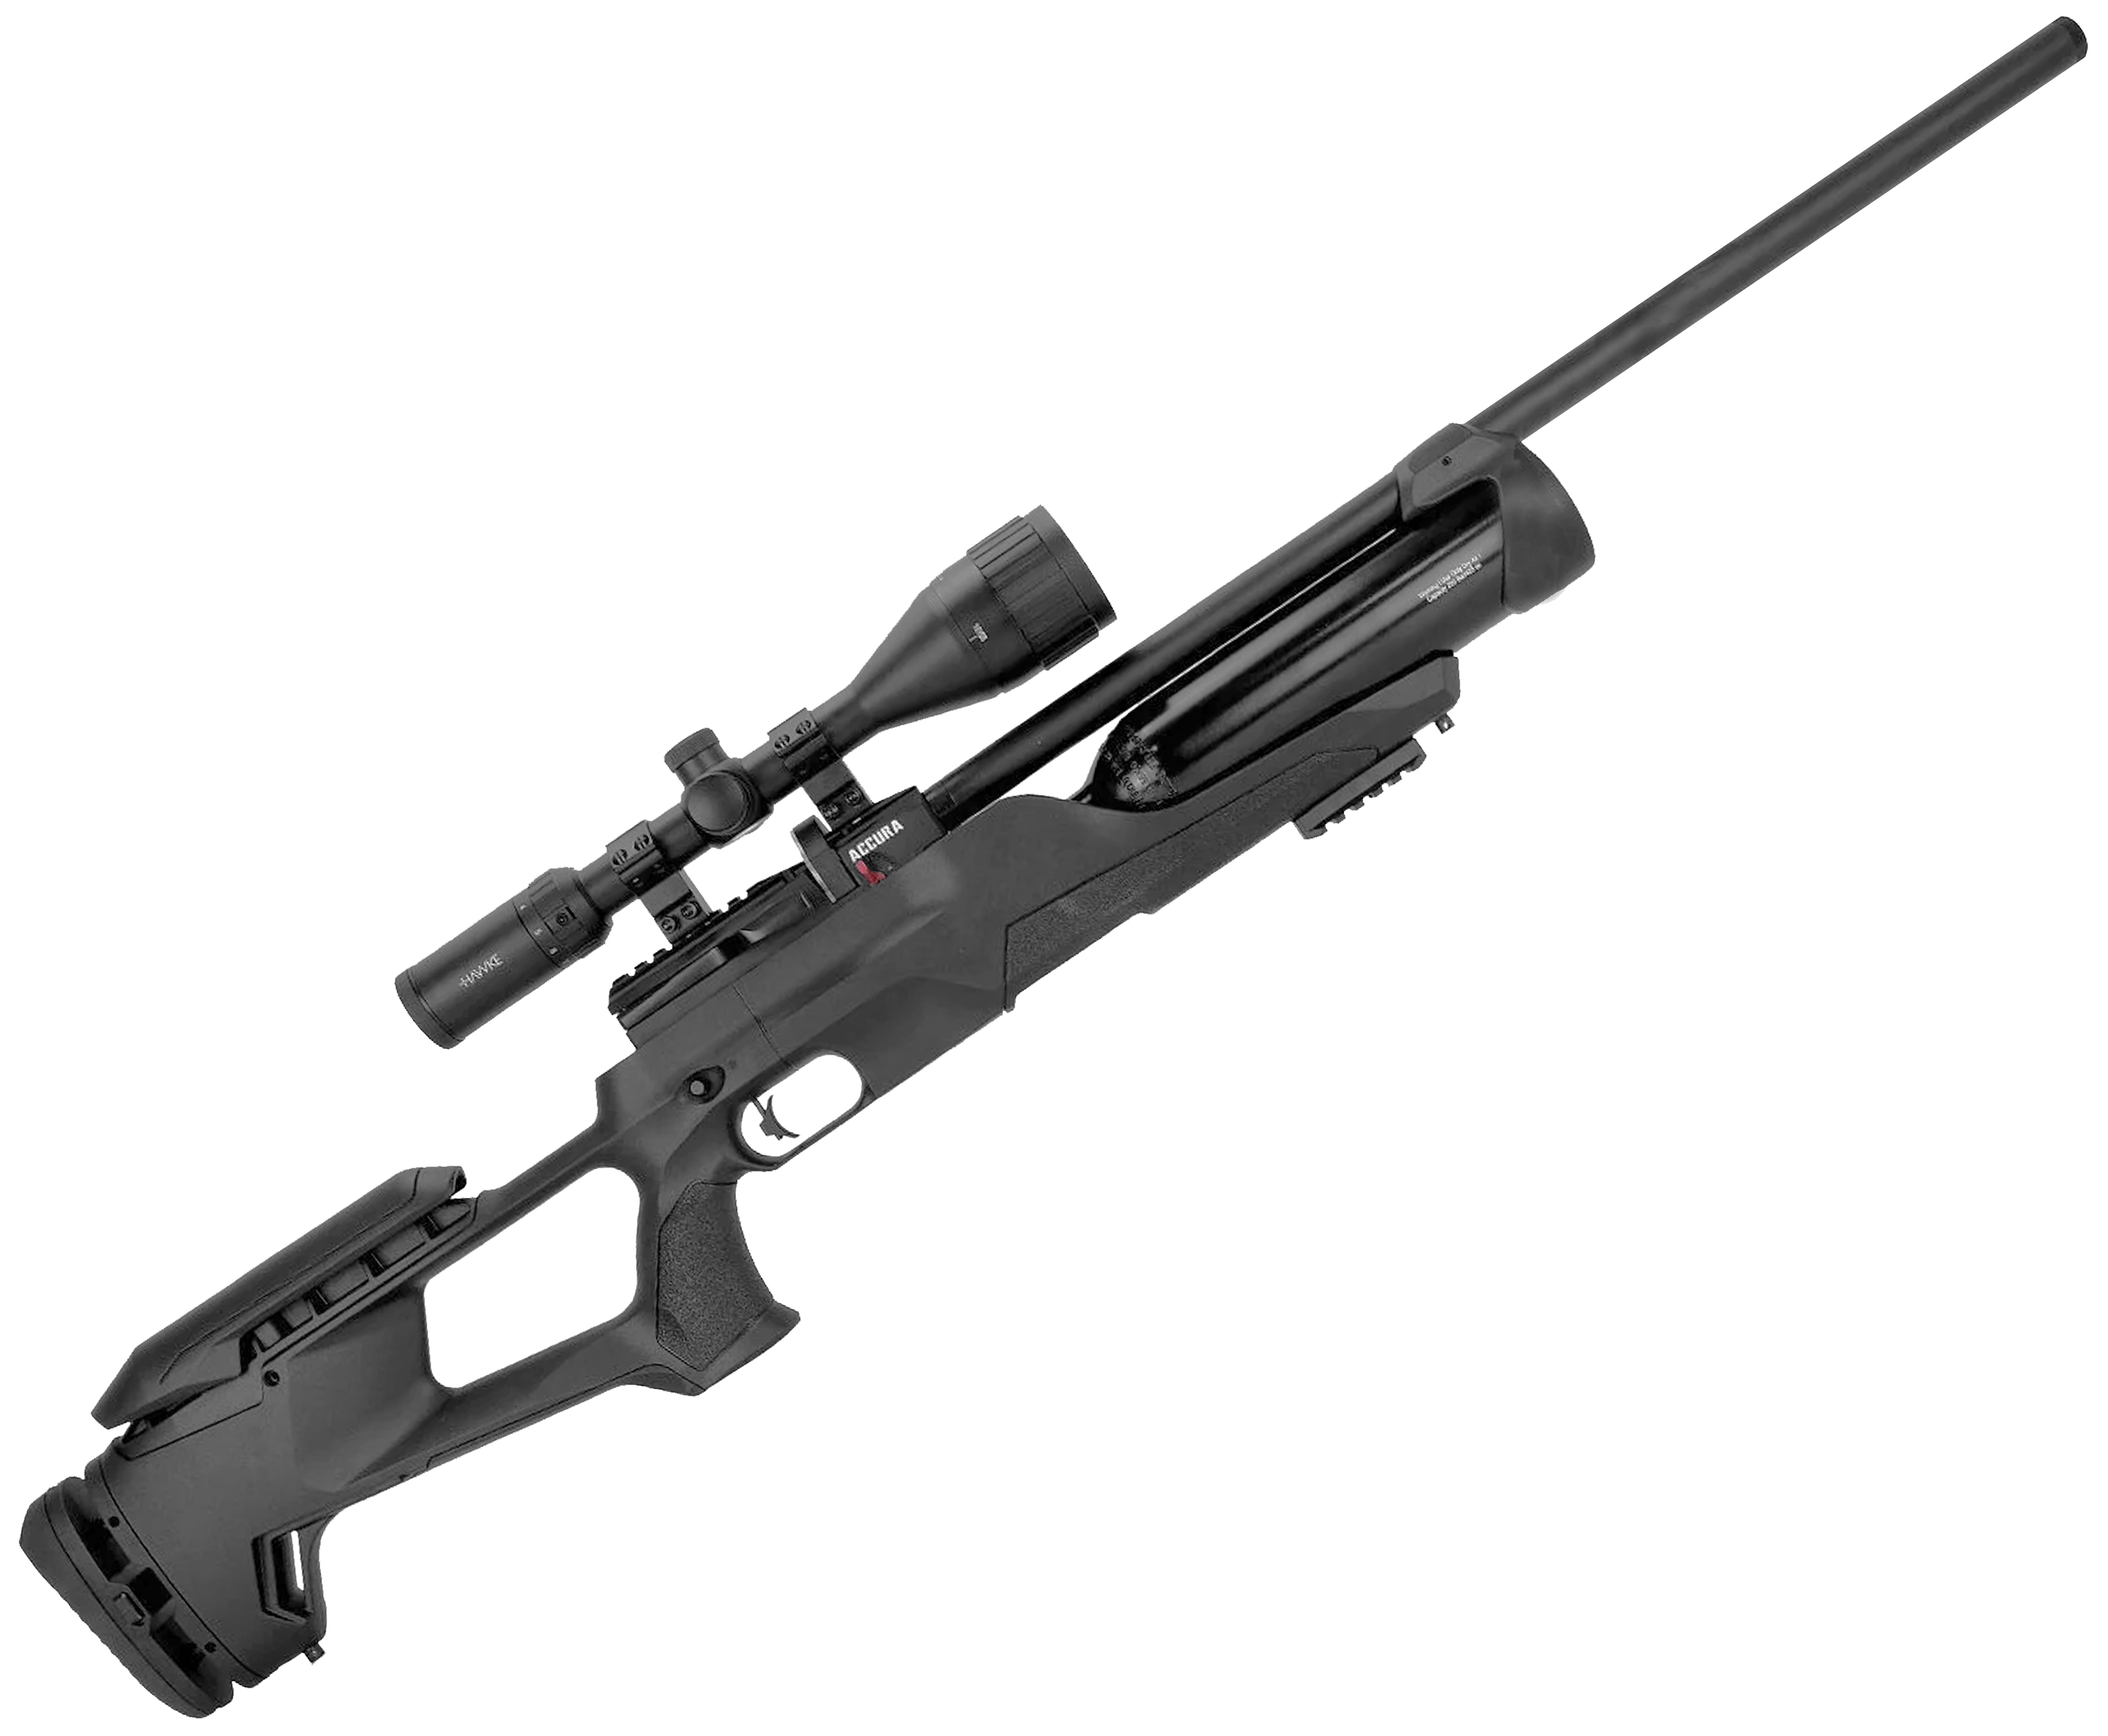 Пневматическая винтовка Reximex Accura 6.35 мм (PCP, 3 Дж, пластик)